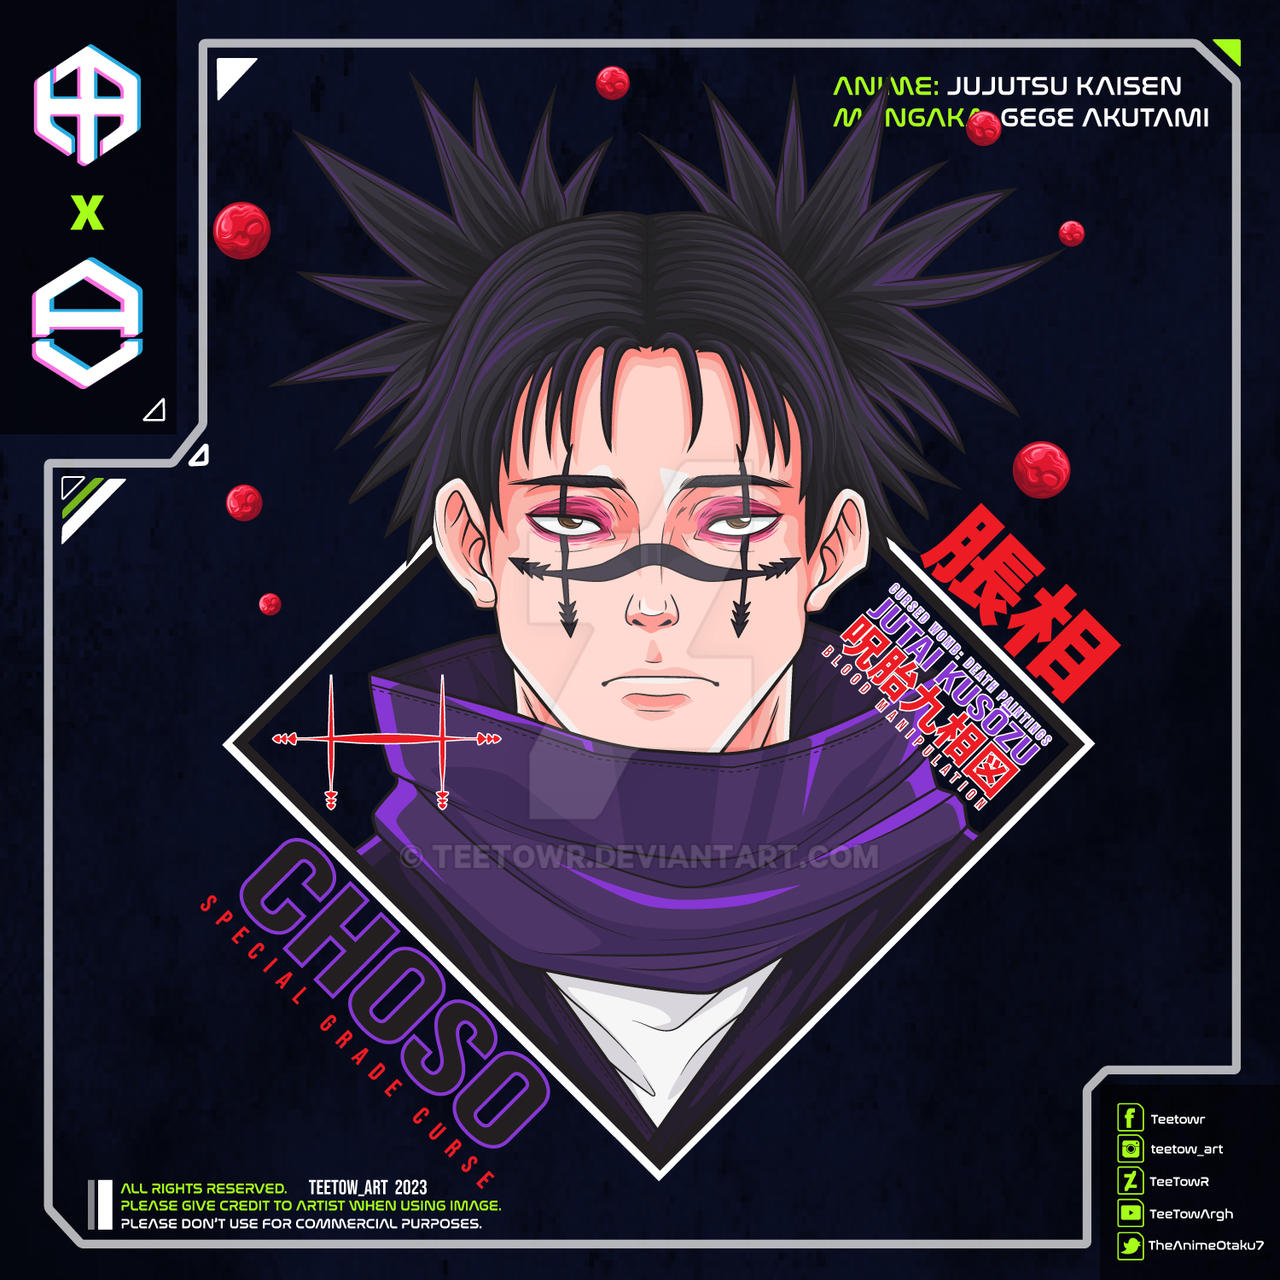 Choso / Jujutsu Kaisen / Anime Wallpaper by mvrusv on DeviantArt